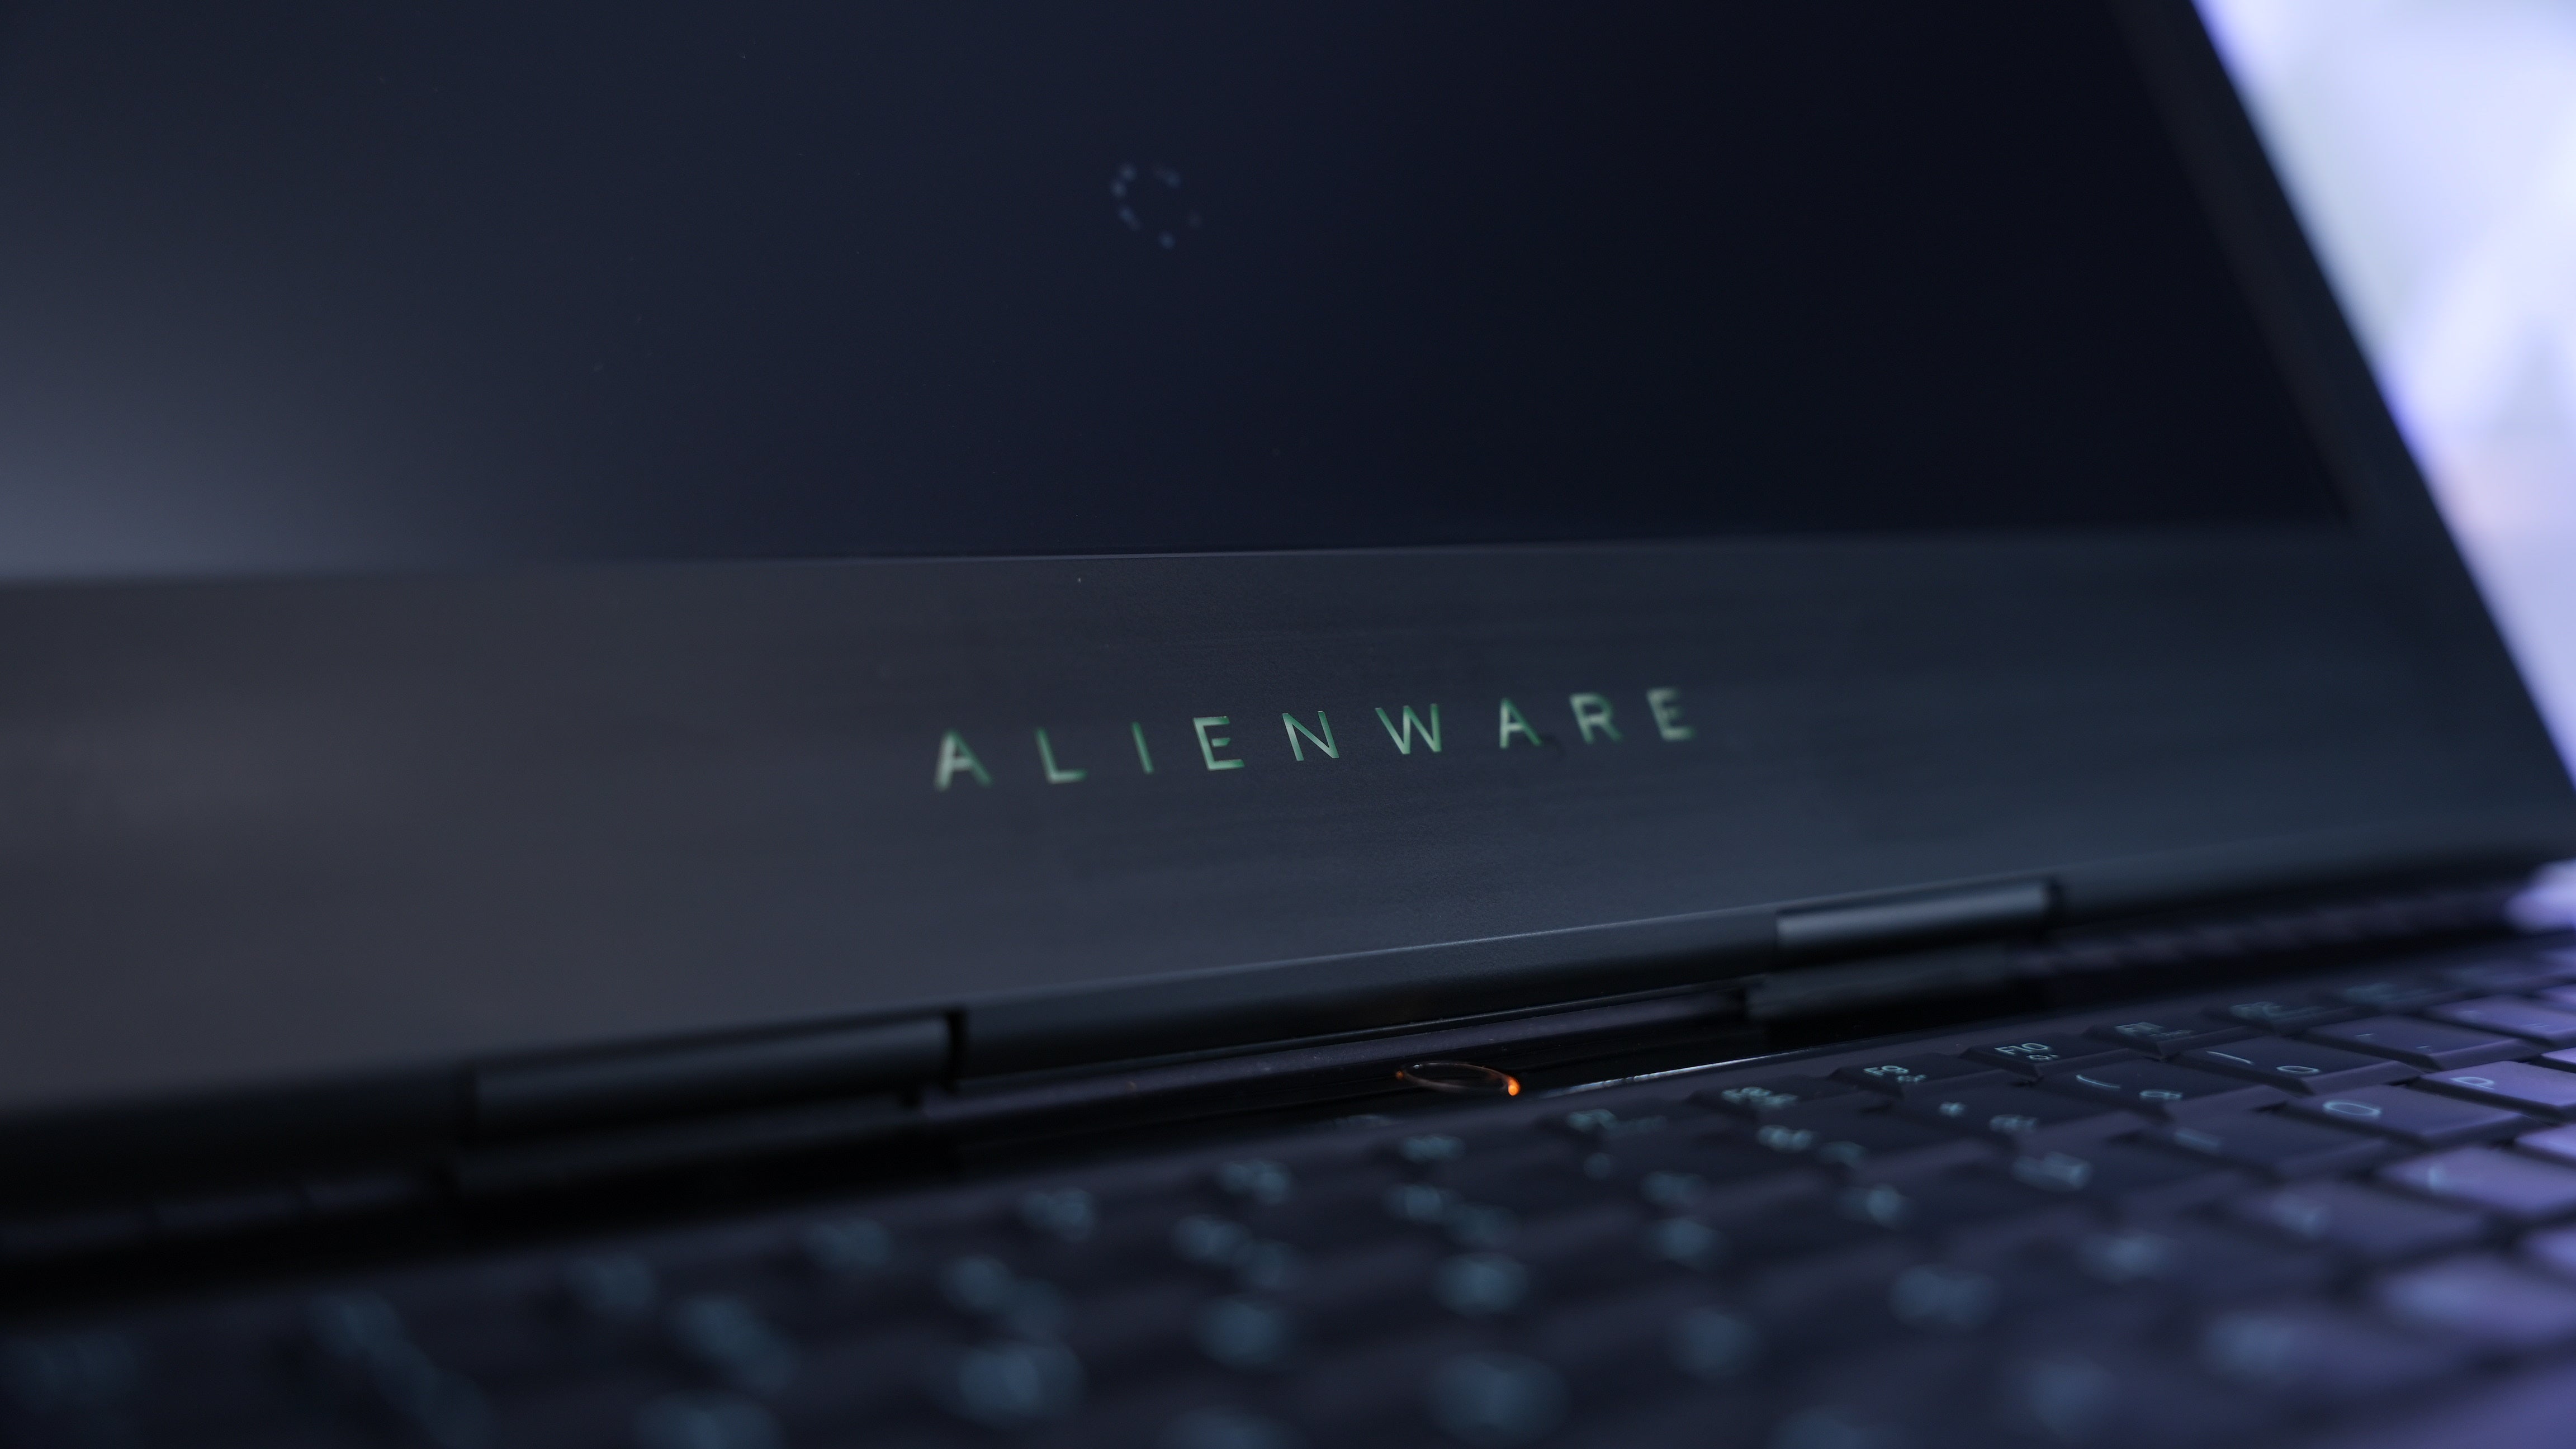 Alienware 15 R3 - Intel i7 7700HQ + GTX 1070 Gaming Laptop (In Stock)